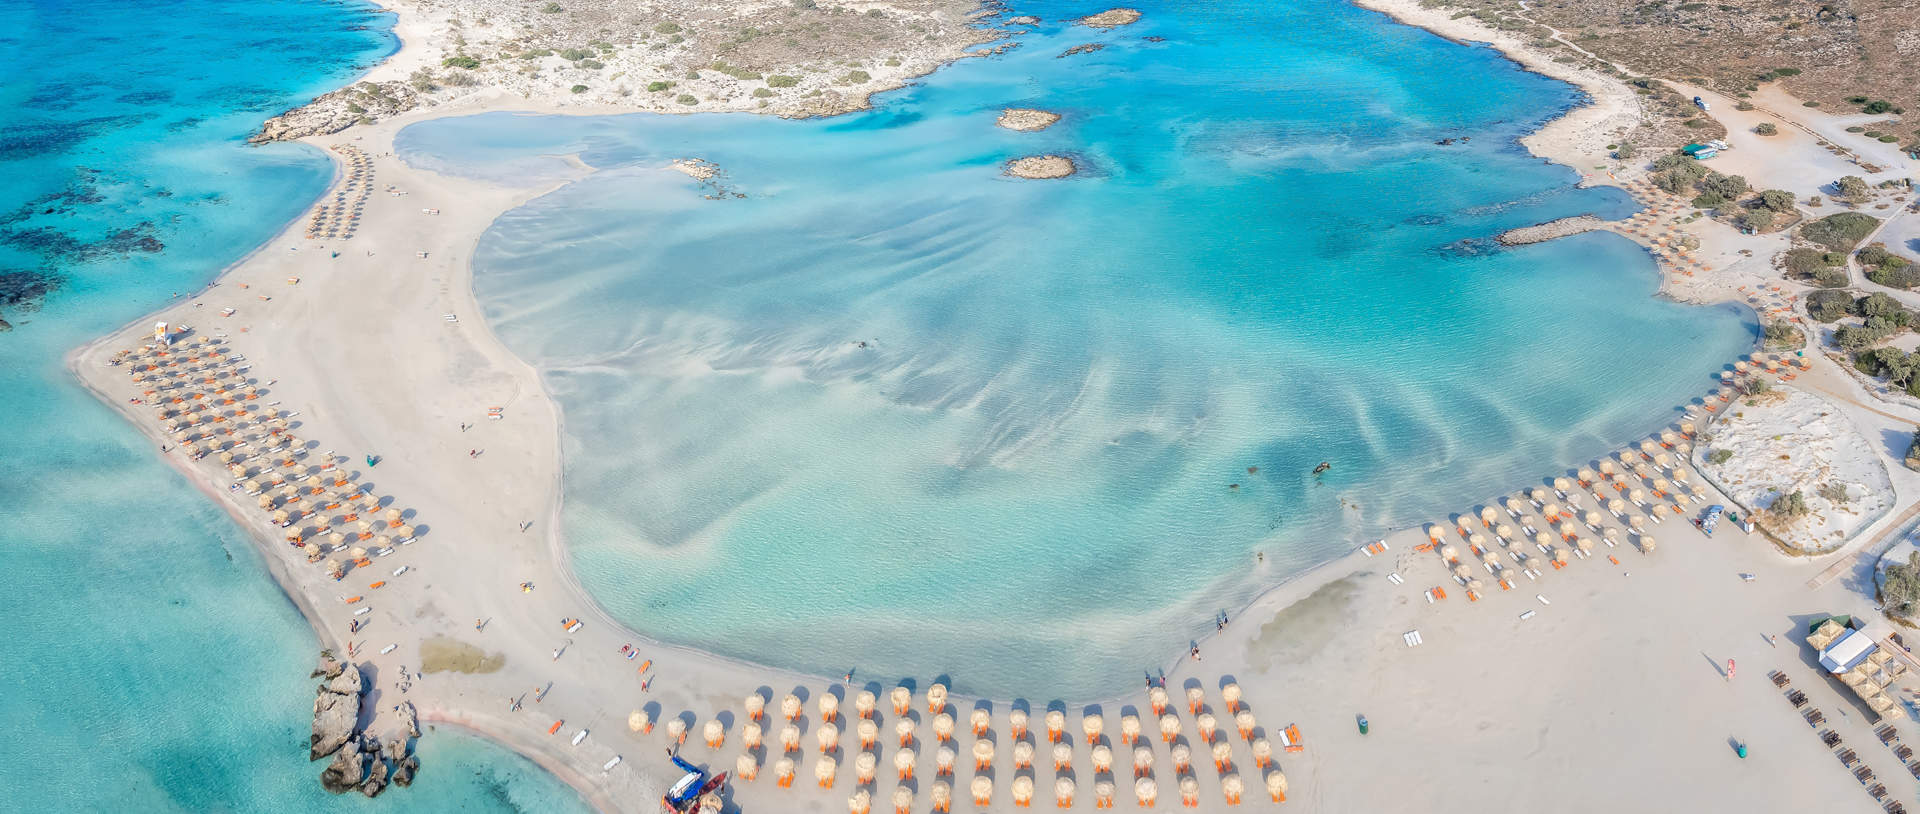 Aerial View Of Elafonissi Beach Crete Greece